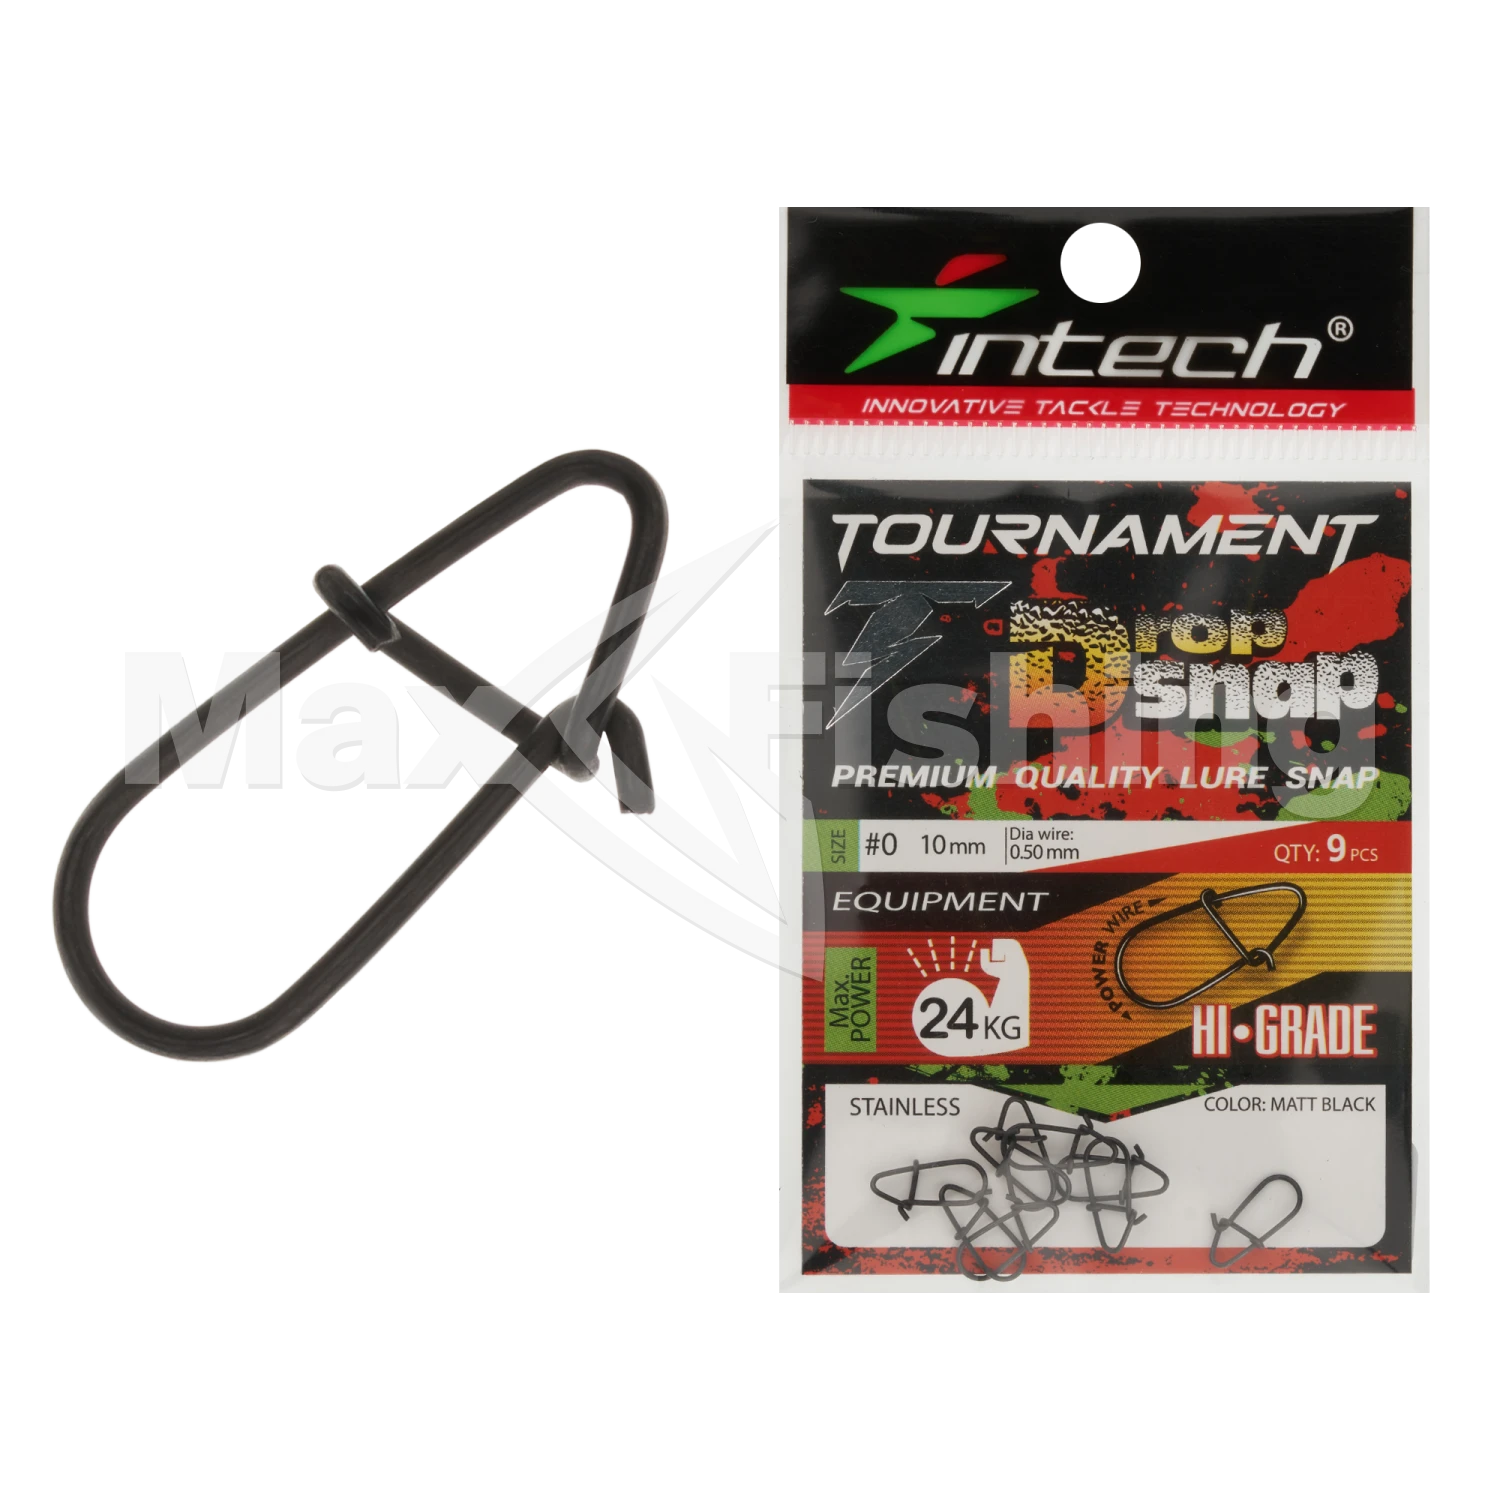 Застежка Intech Tournament Drop Snap #0 Matt black